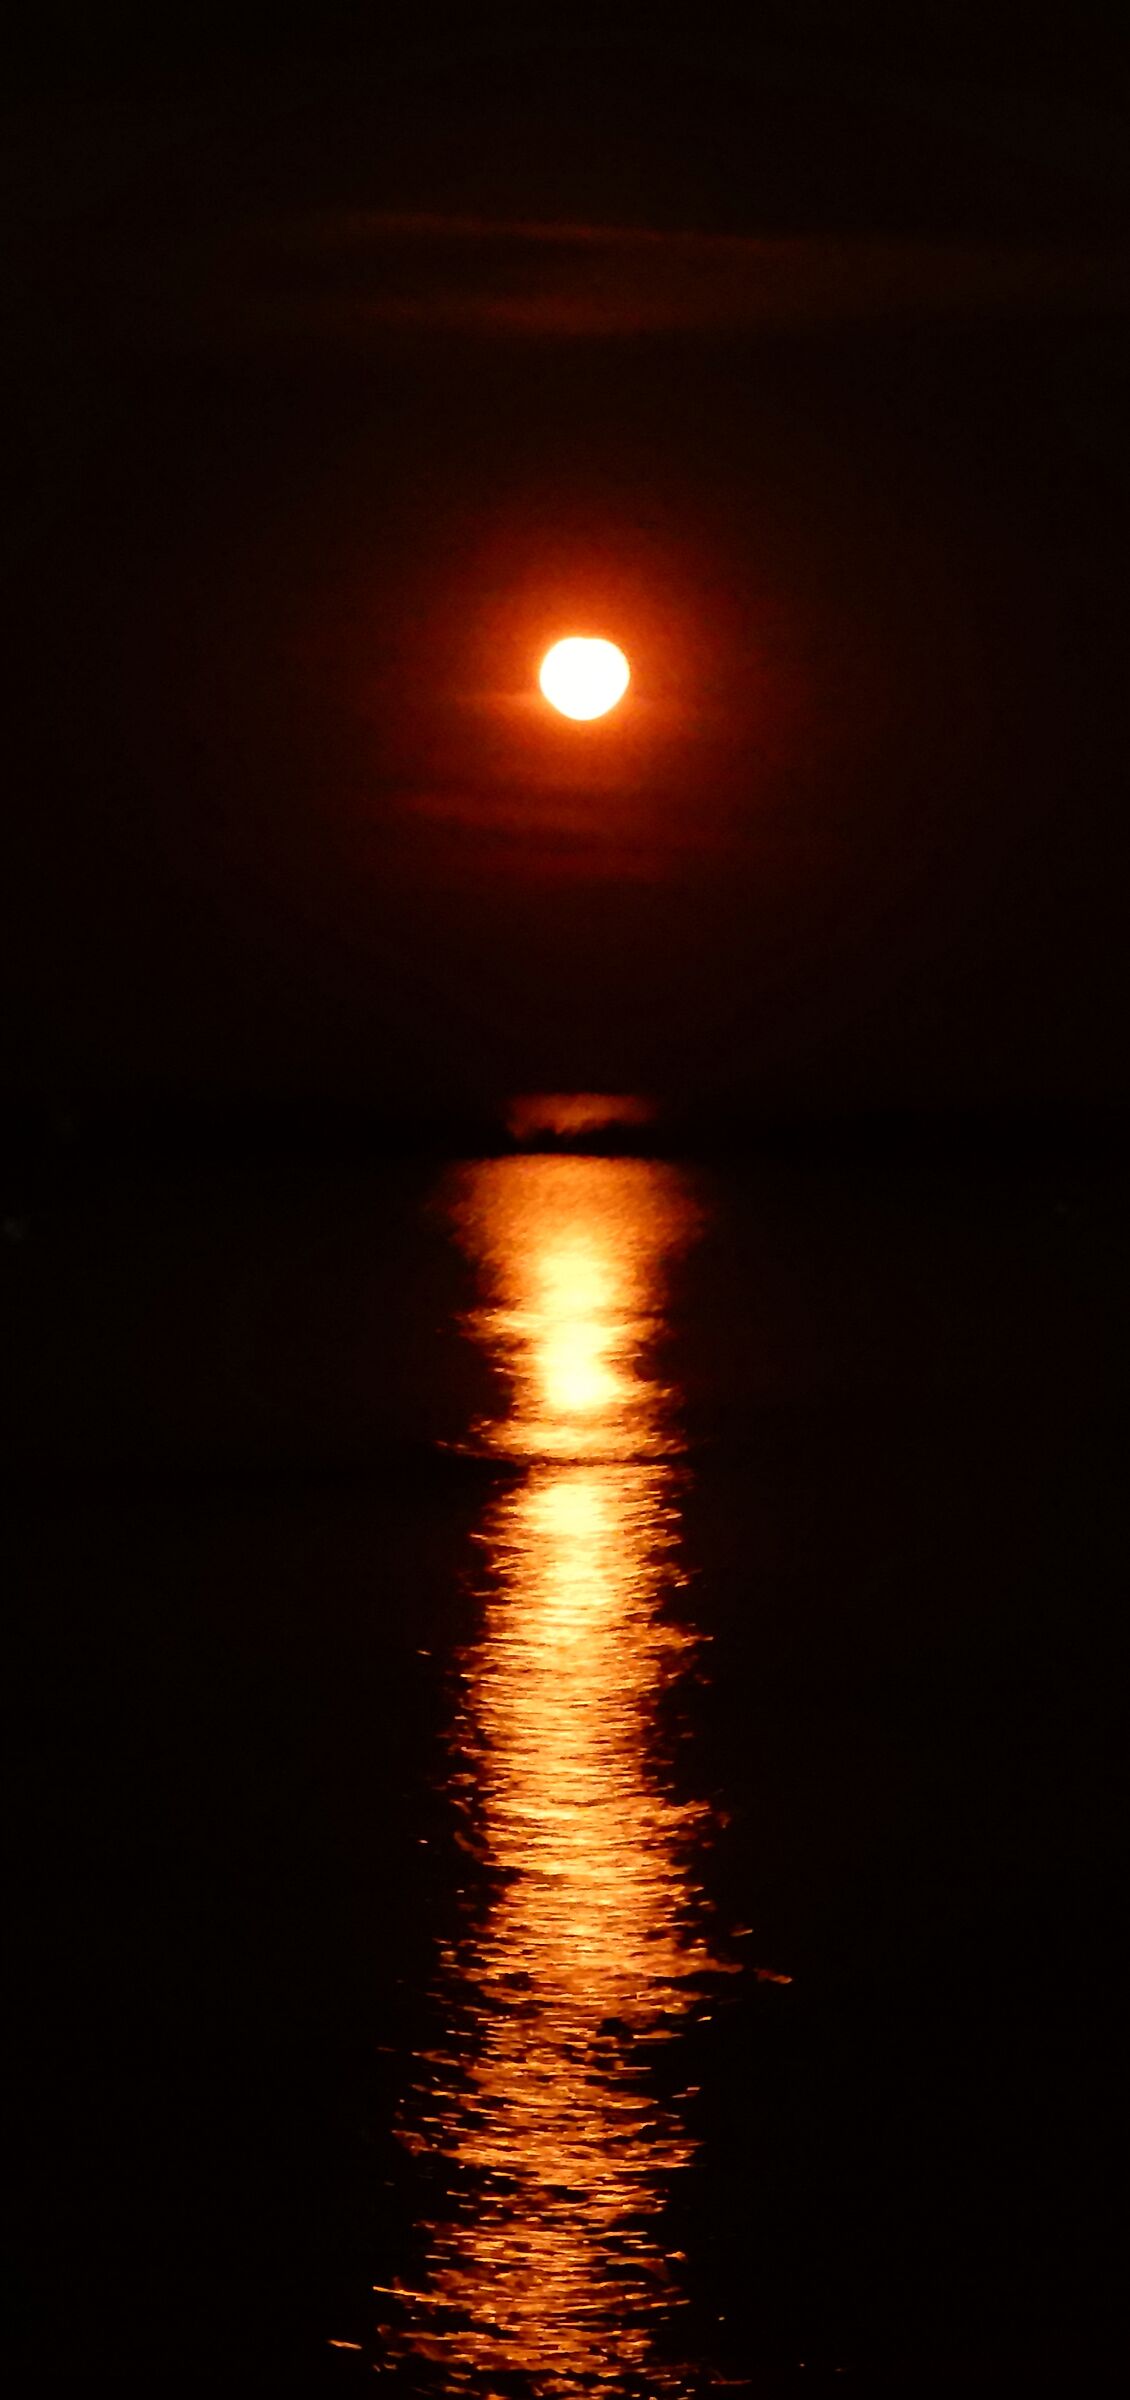 Luna rossa riflessa sul mare...